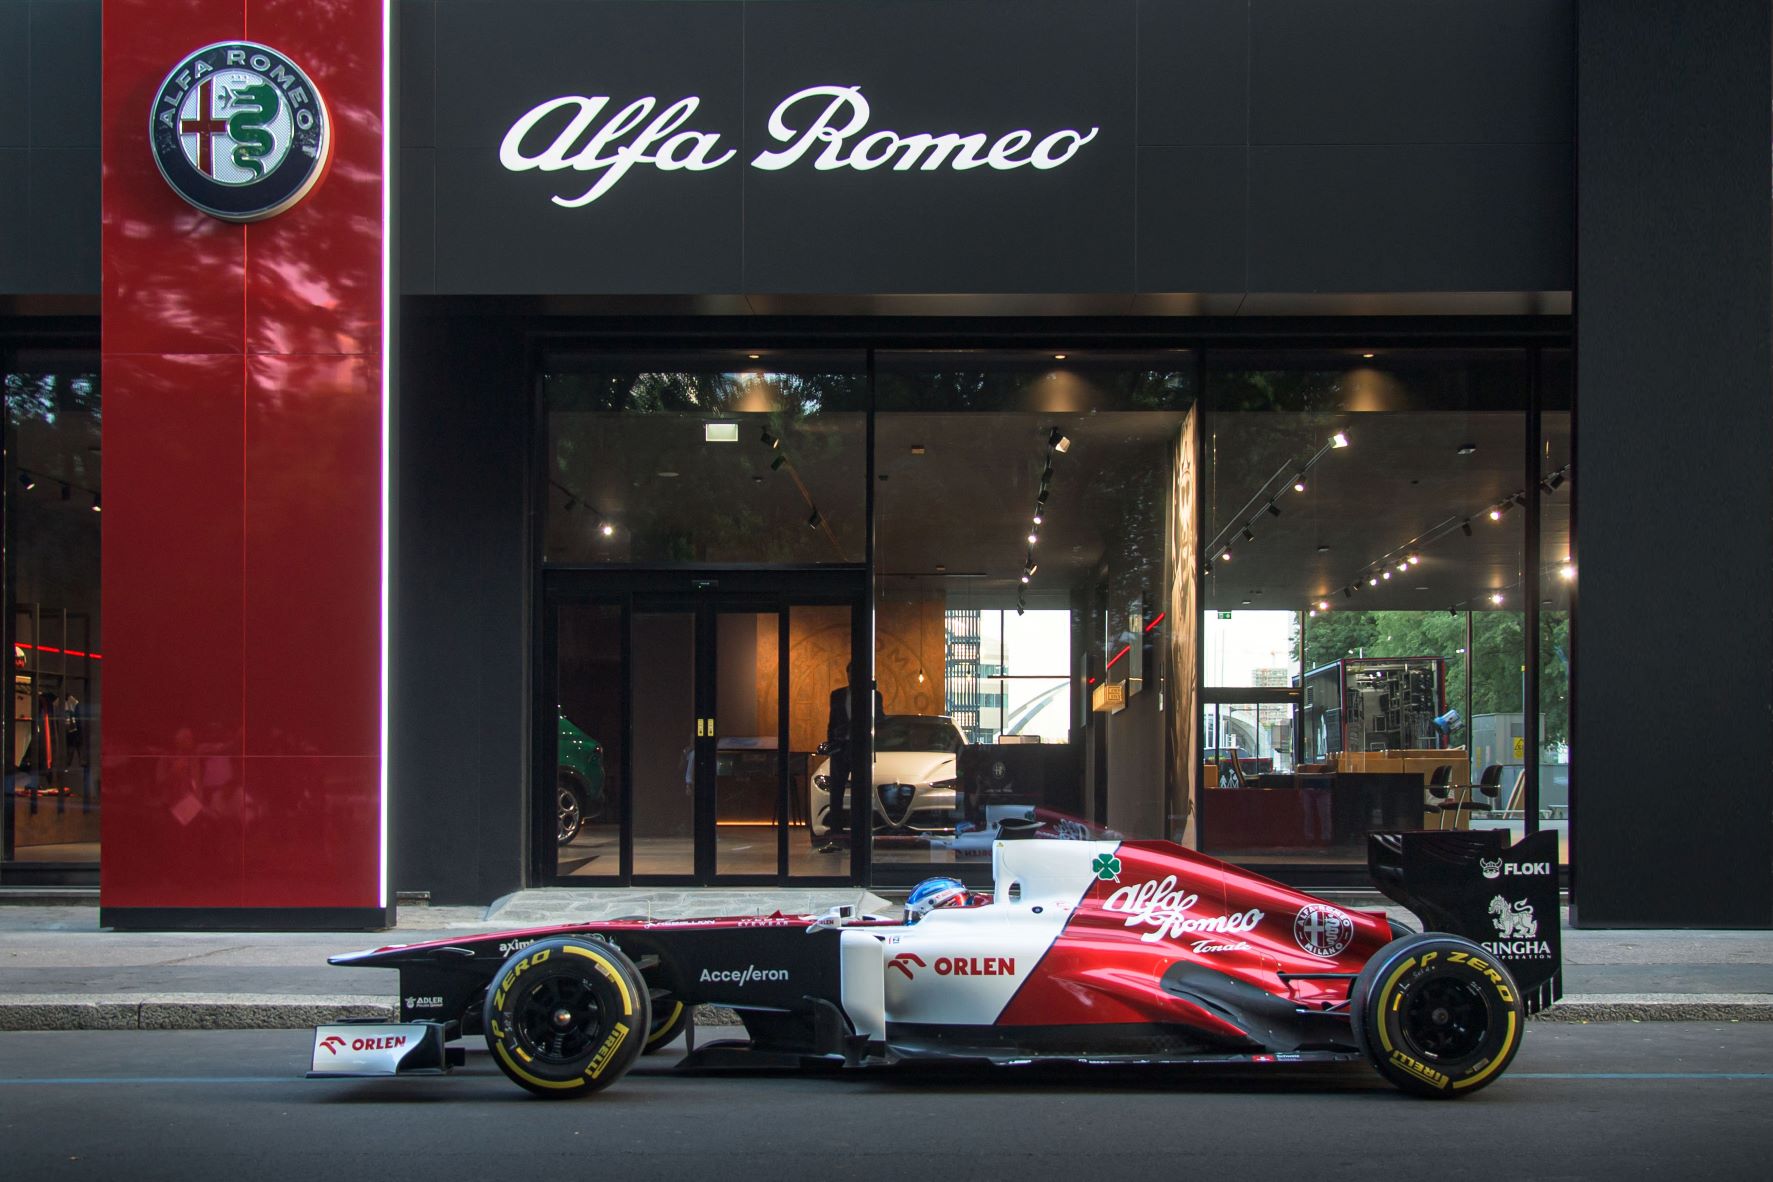 An Alfa Romeo Orlen F1 team car in front of an Alfa Romeo dealership in Milan